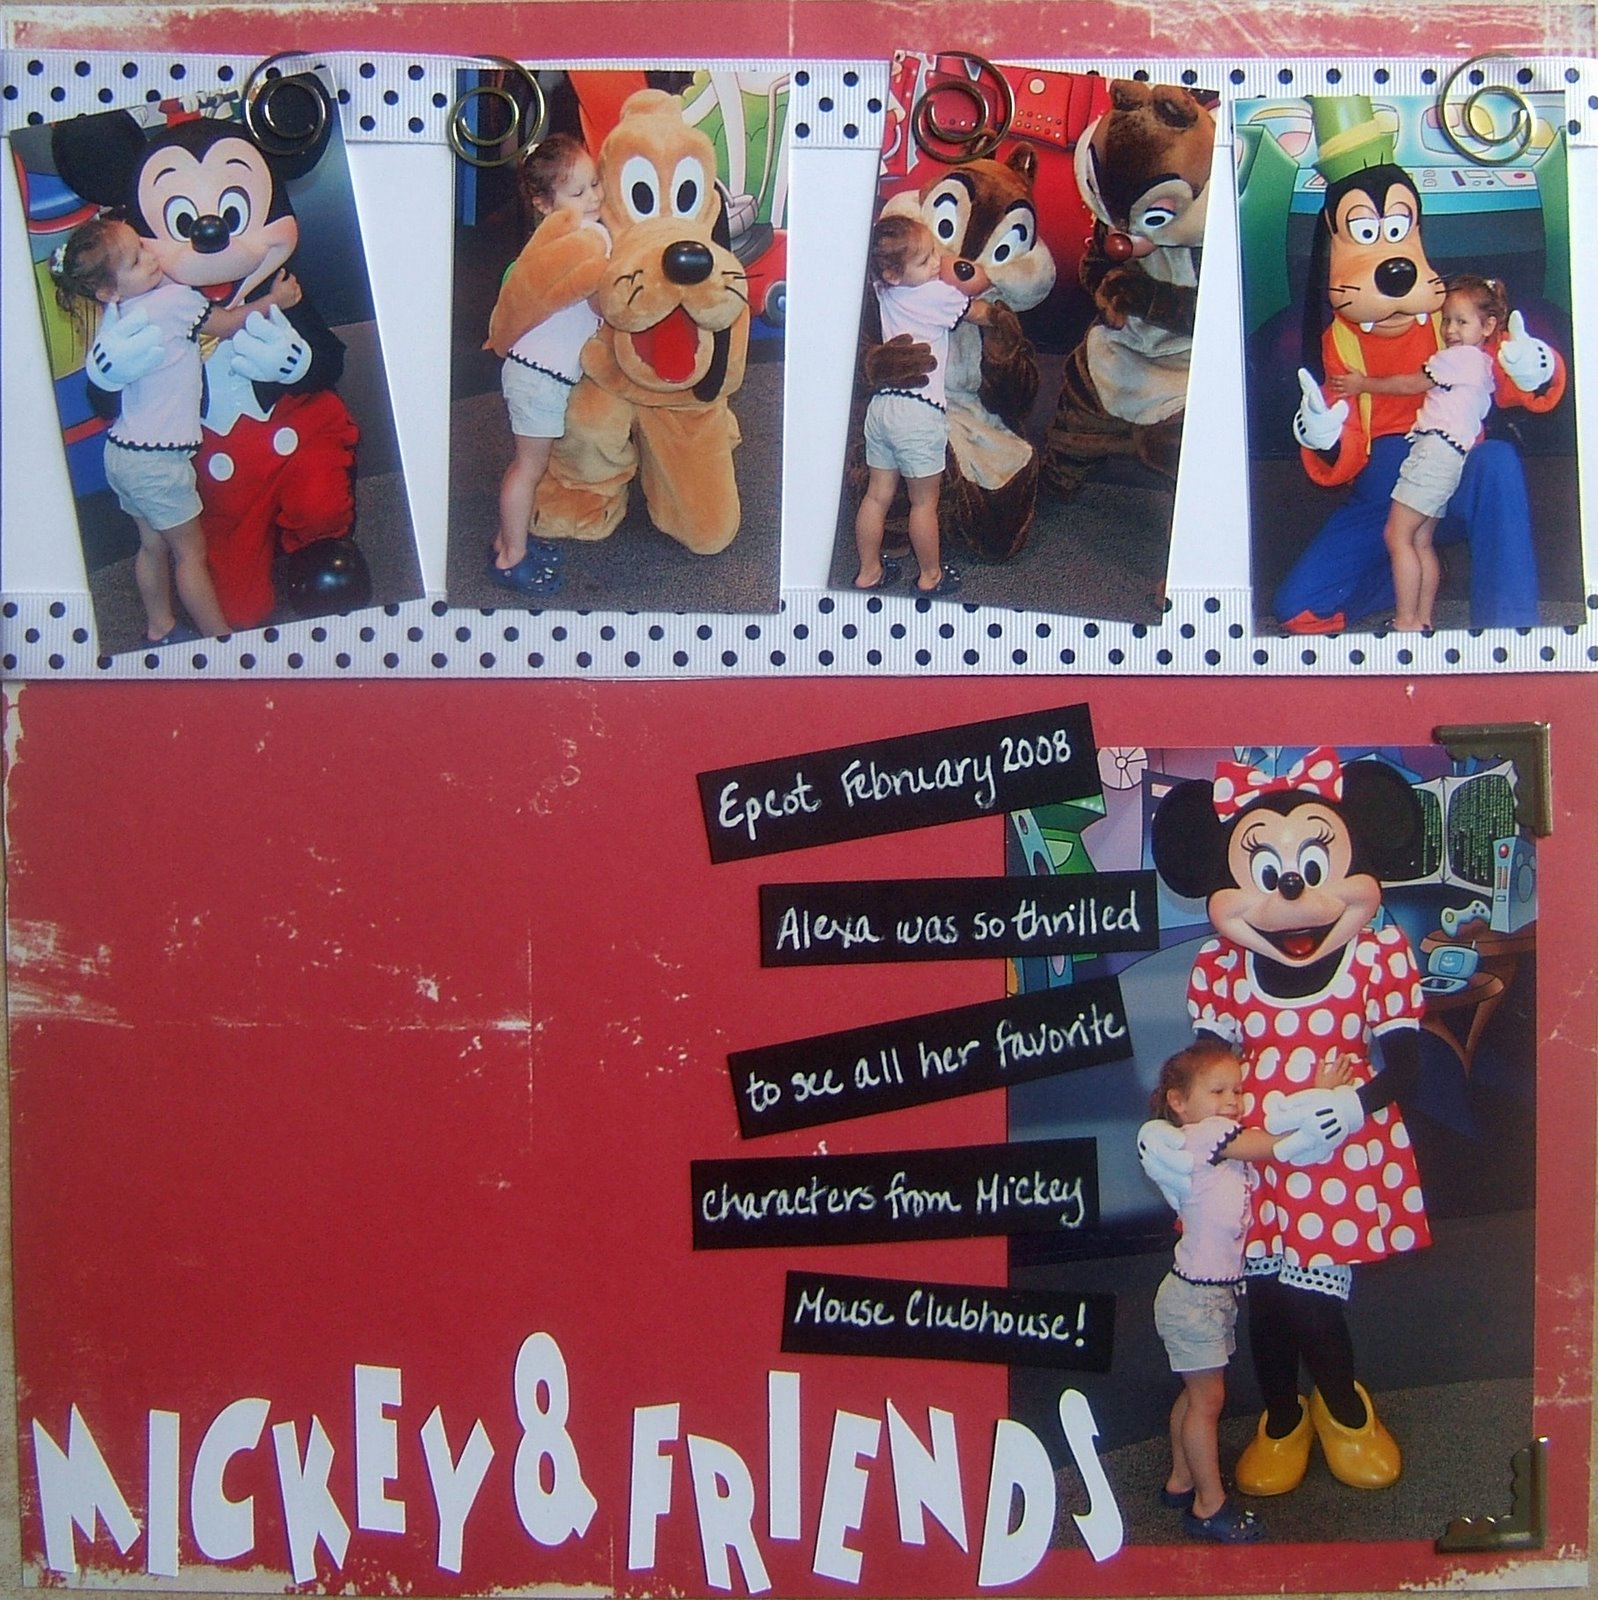 [Mickey+and+Friends+Feb+2008.JPG]